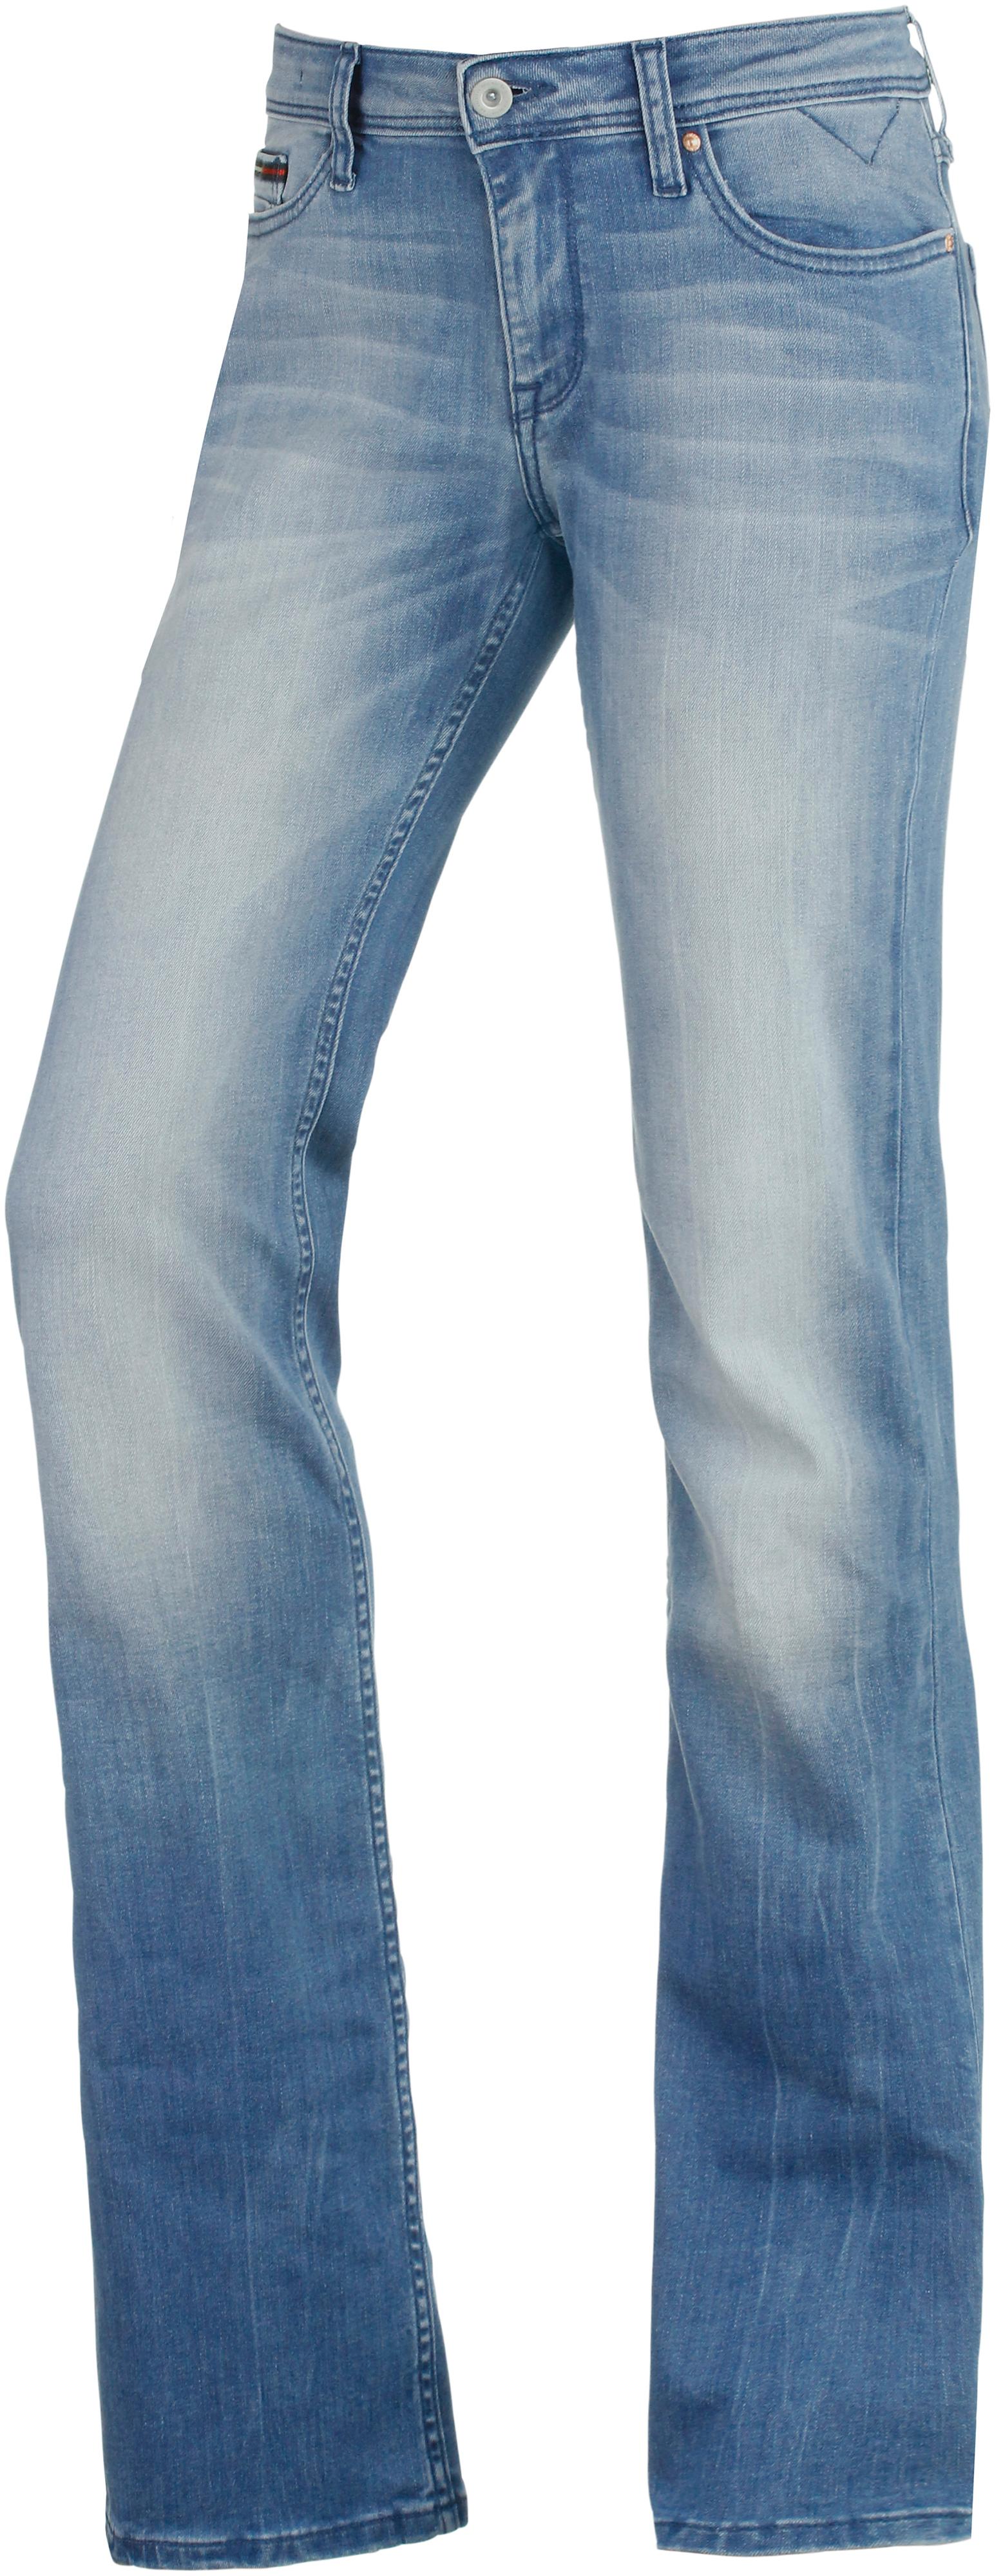 tommy hilfiger sandy bootcut jeans